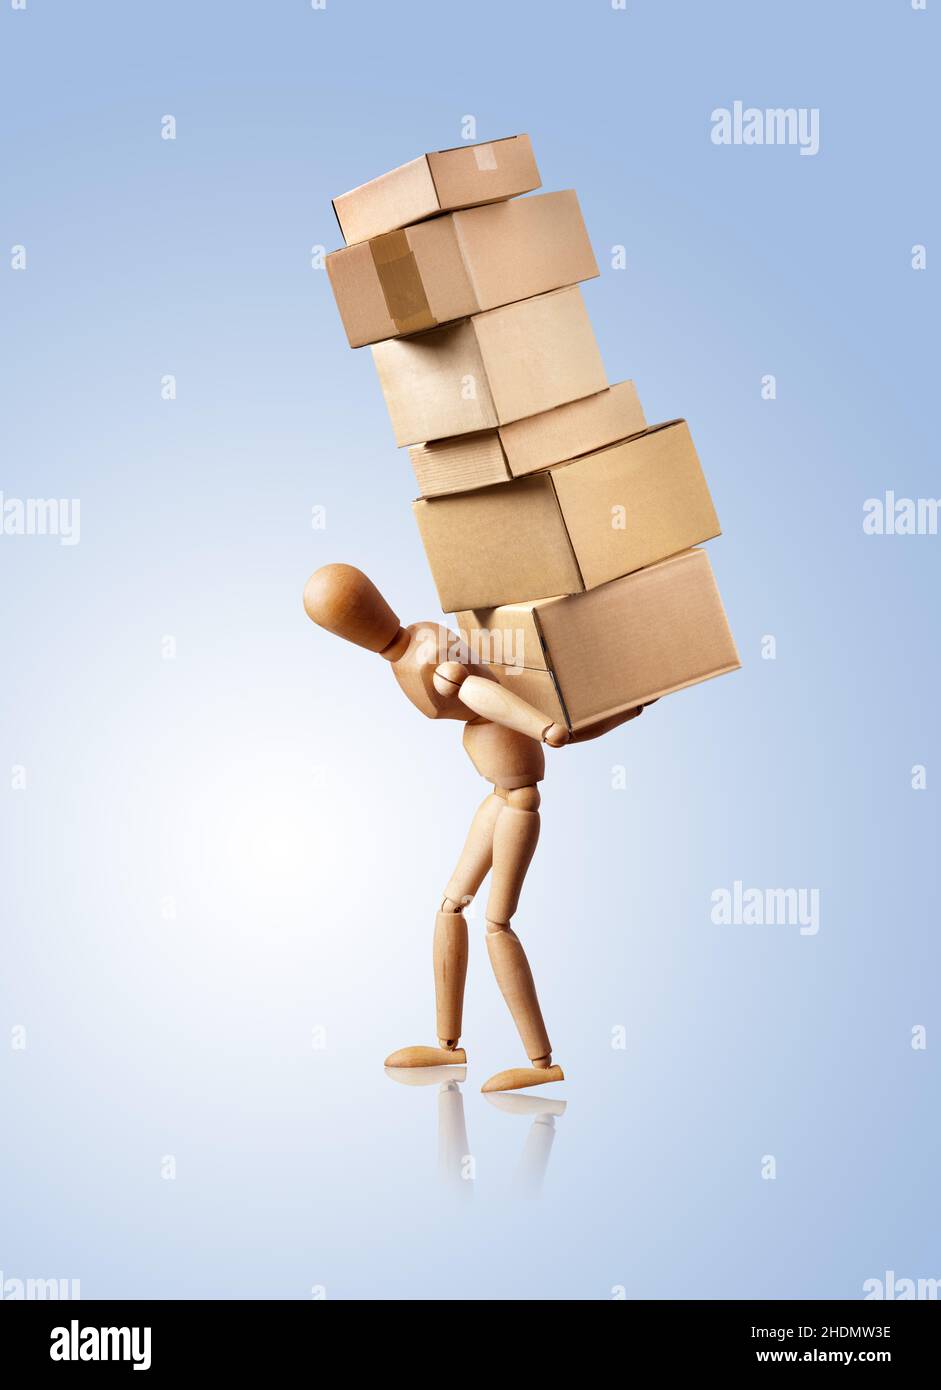 burden, burnout, packages, delivery, burdens, burnouts, stress, deliver, deliveries, delivering Stock Photo